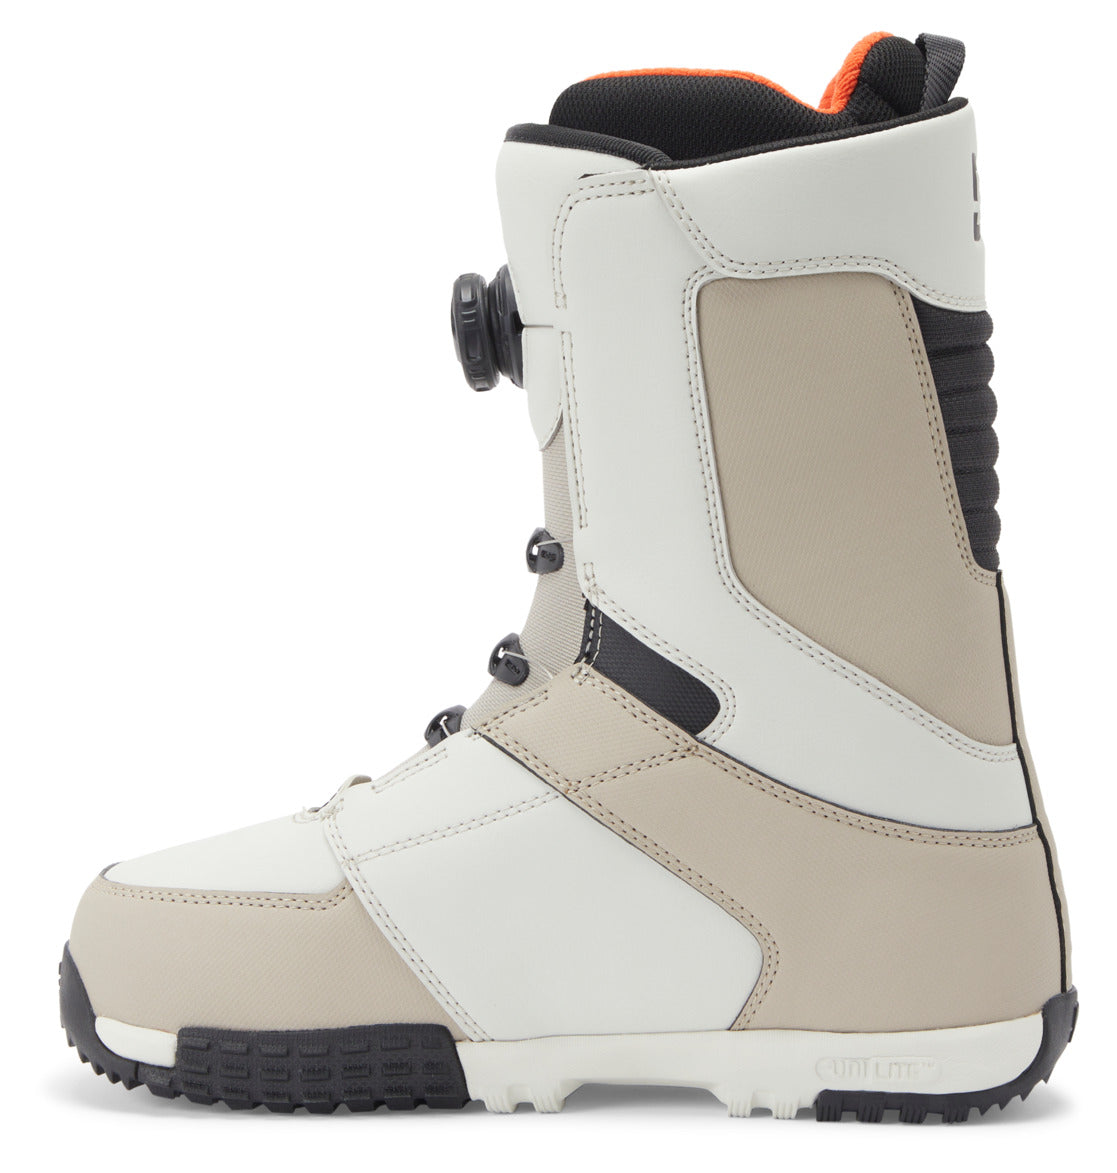 Control BOA Snowboard Boots